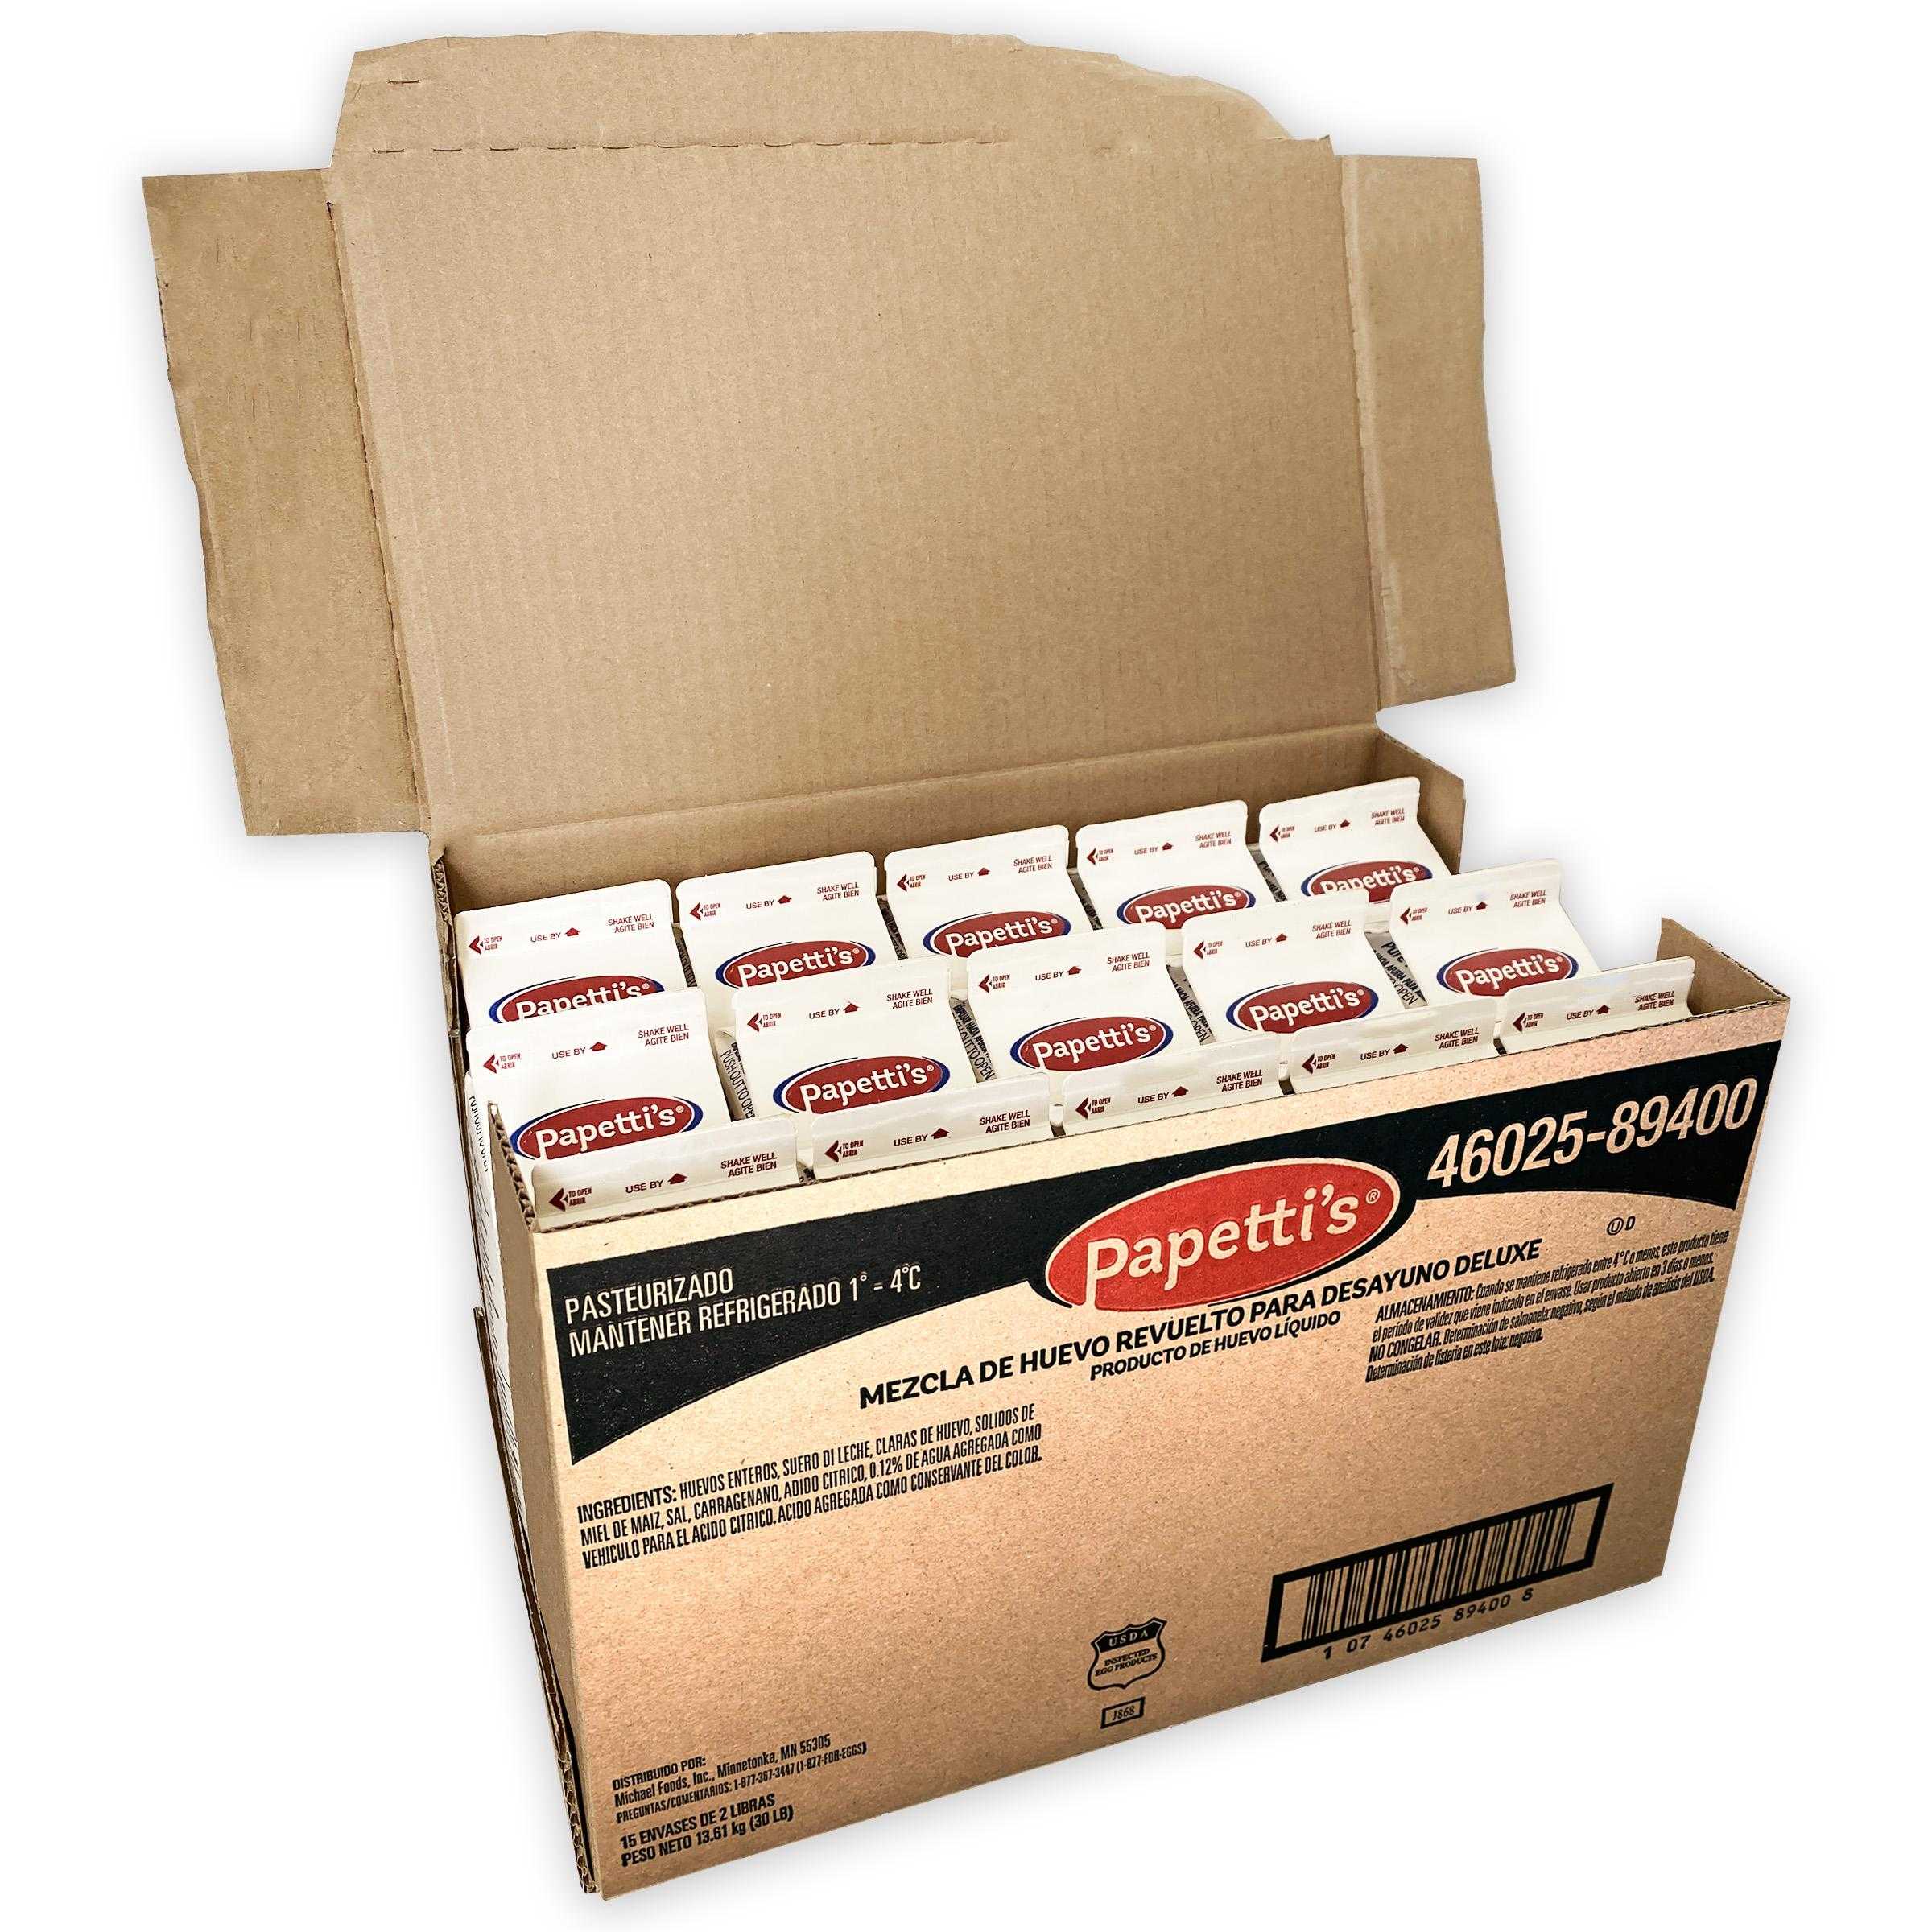 Papetti’s® Refrigerated Liquid Deluxe Scrambled Egg Mix, 15/2 Lb Cartons